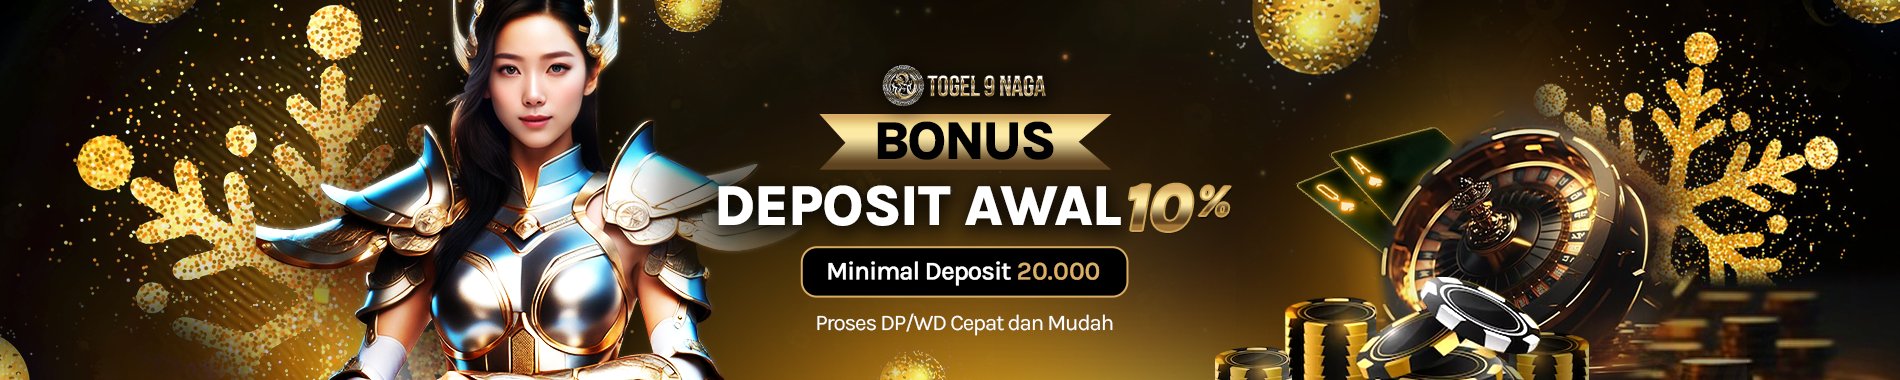 Bonus Deposit Awal Togel9naga